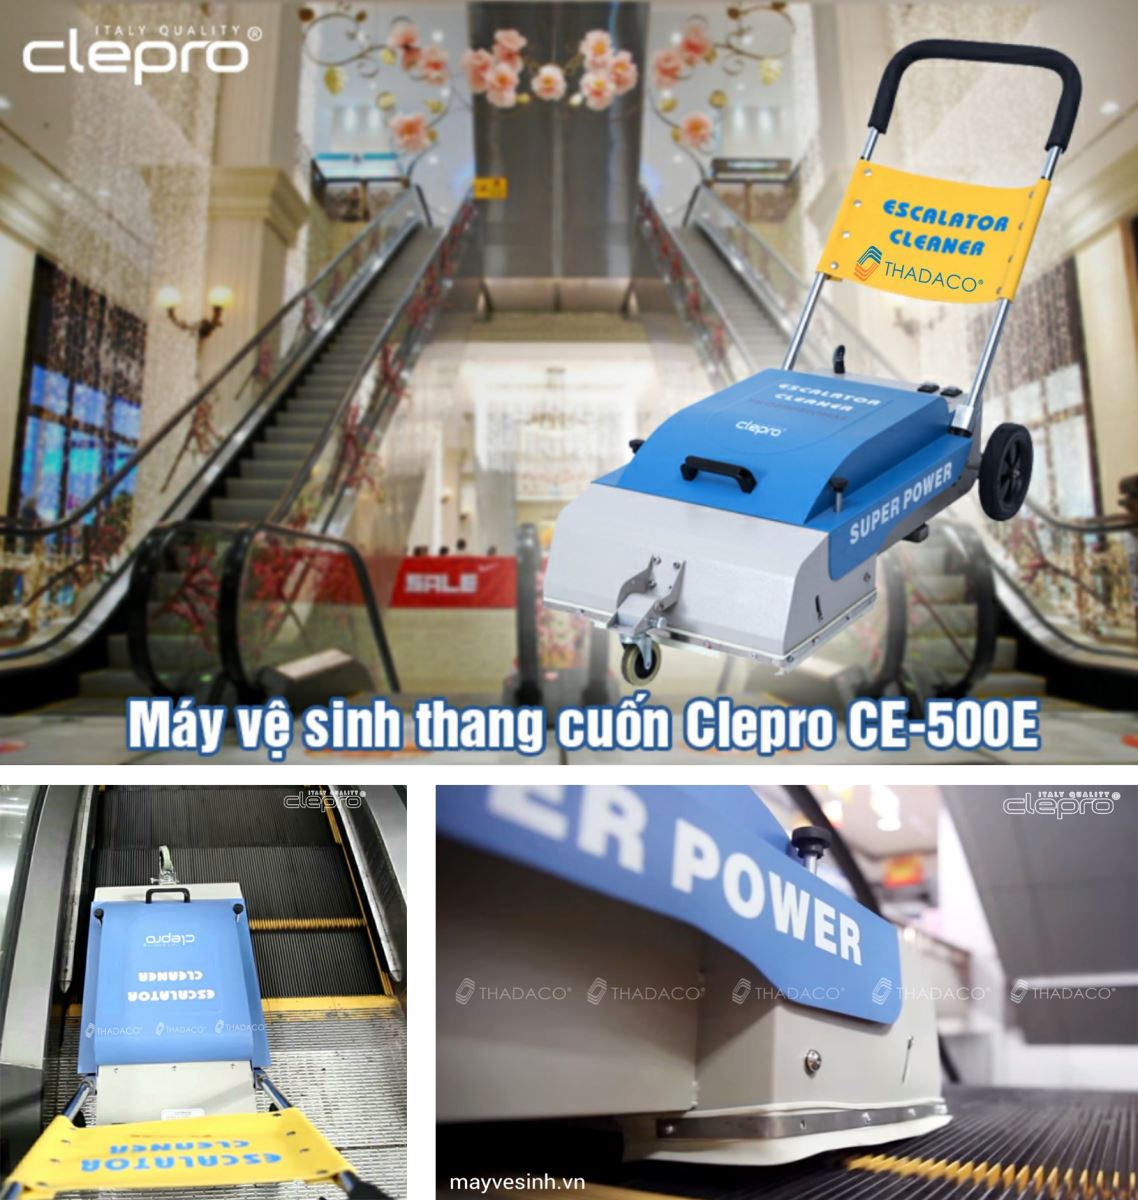 may Clepro CE-500E